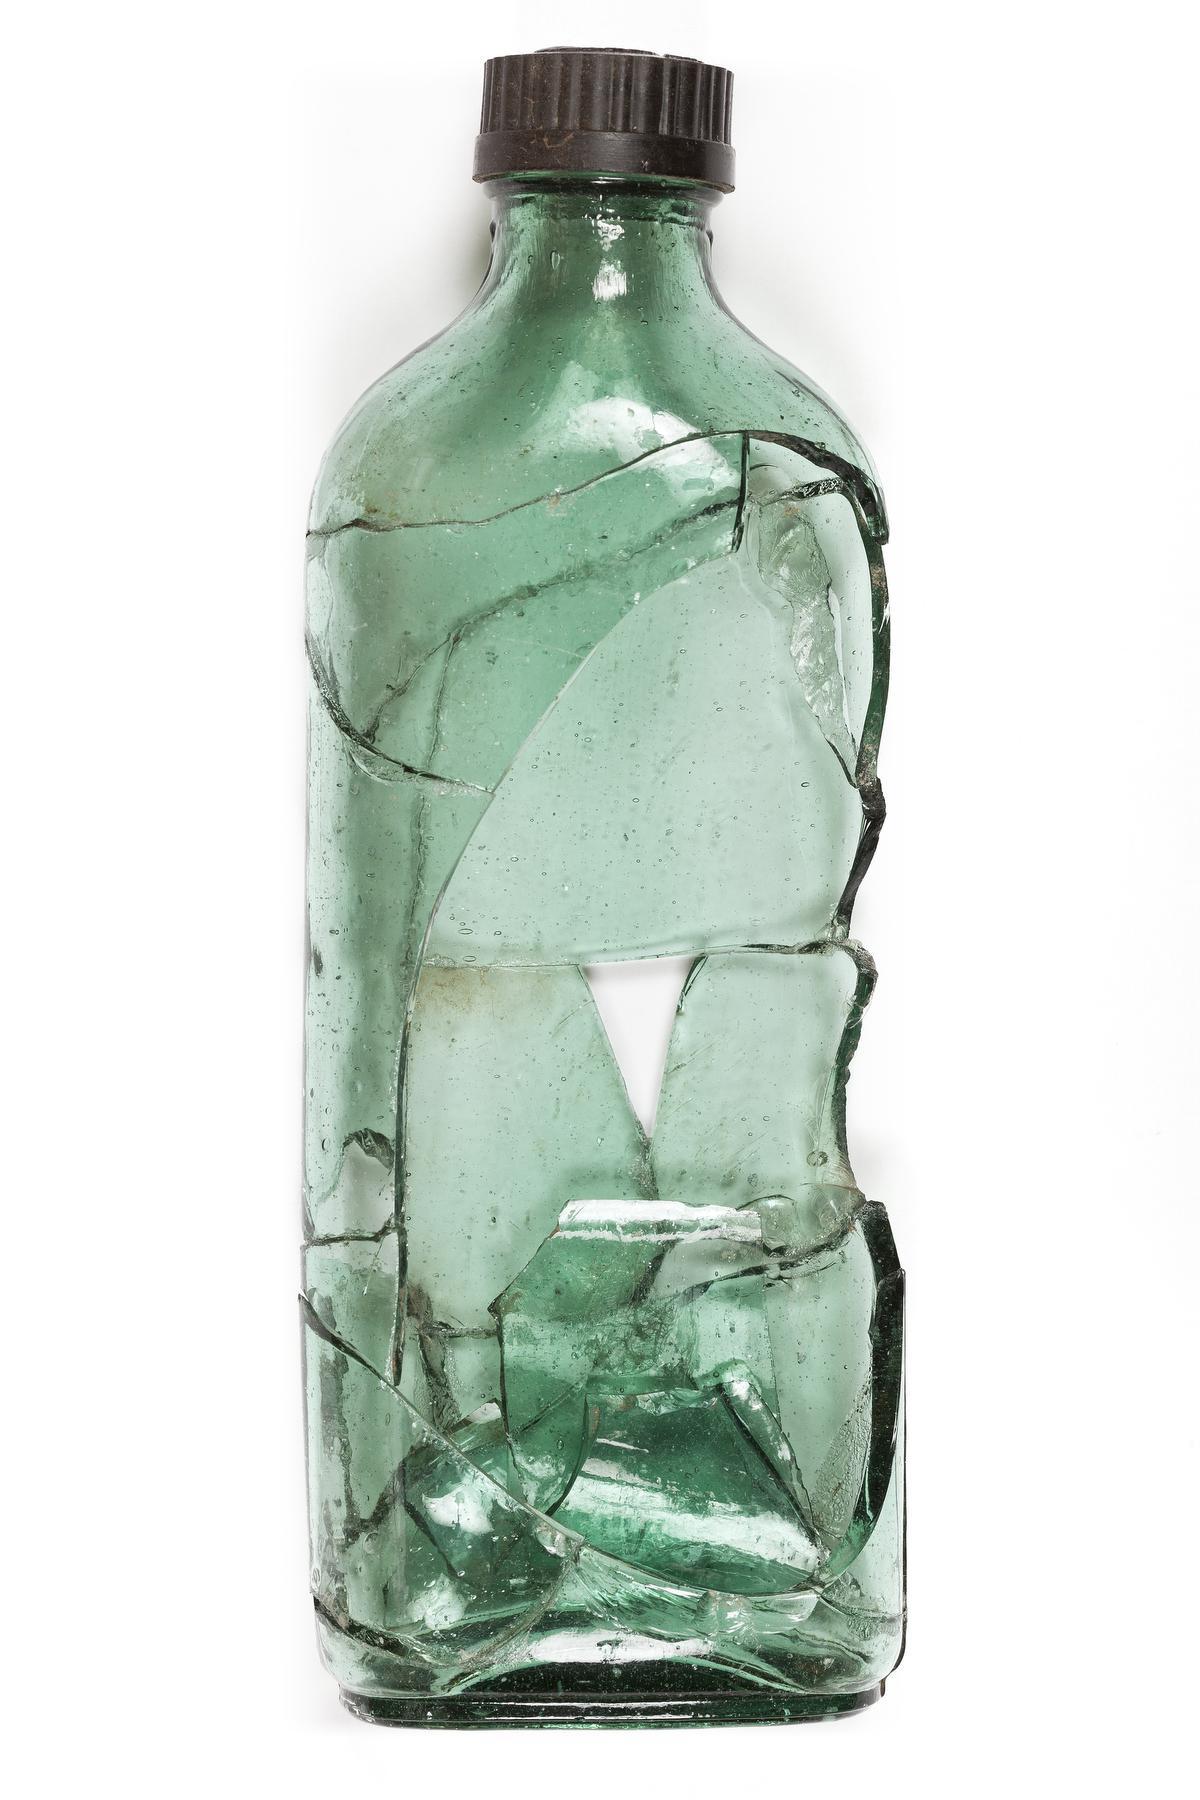  © Reconstructed bottle of Glefina Madrid, Spanje, circa 1950–1960, Patrimonio Nacional, Spanje